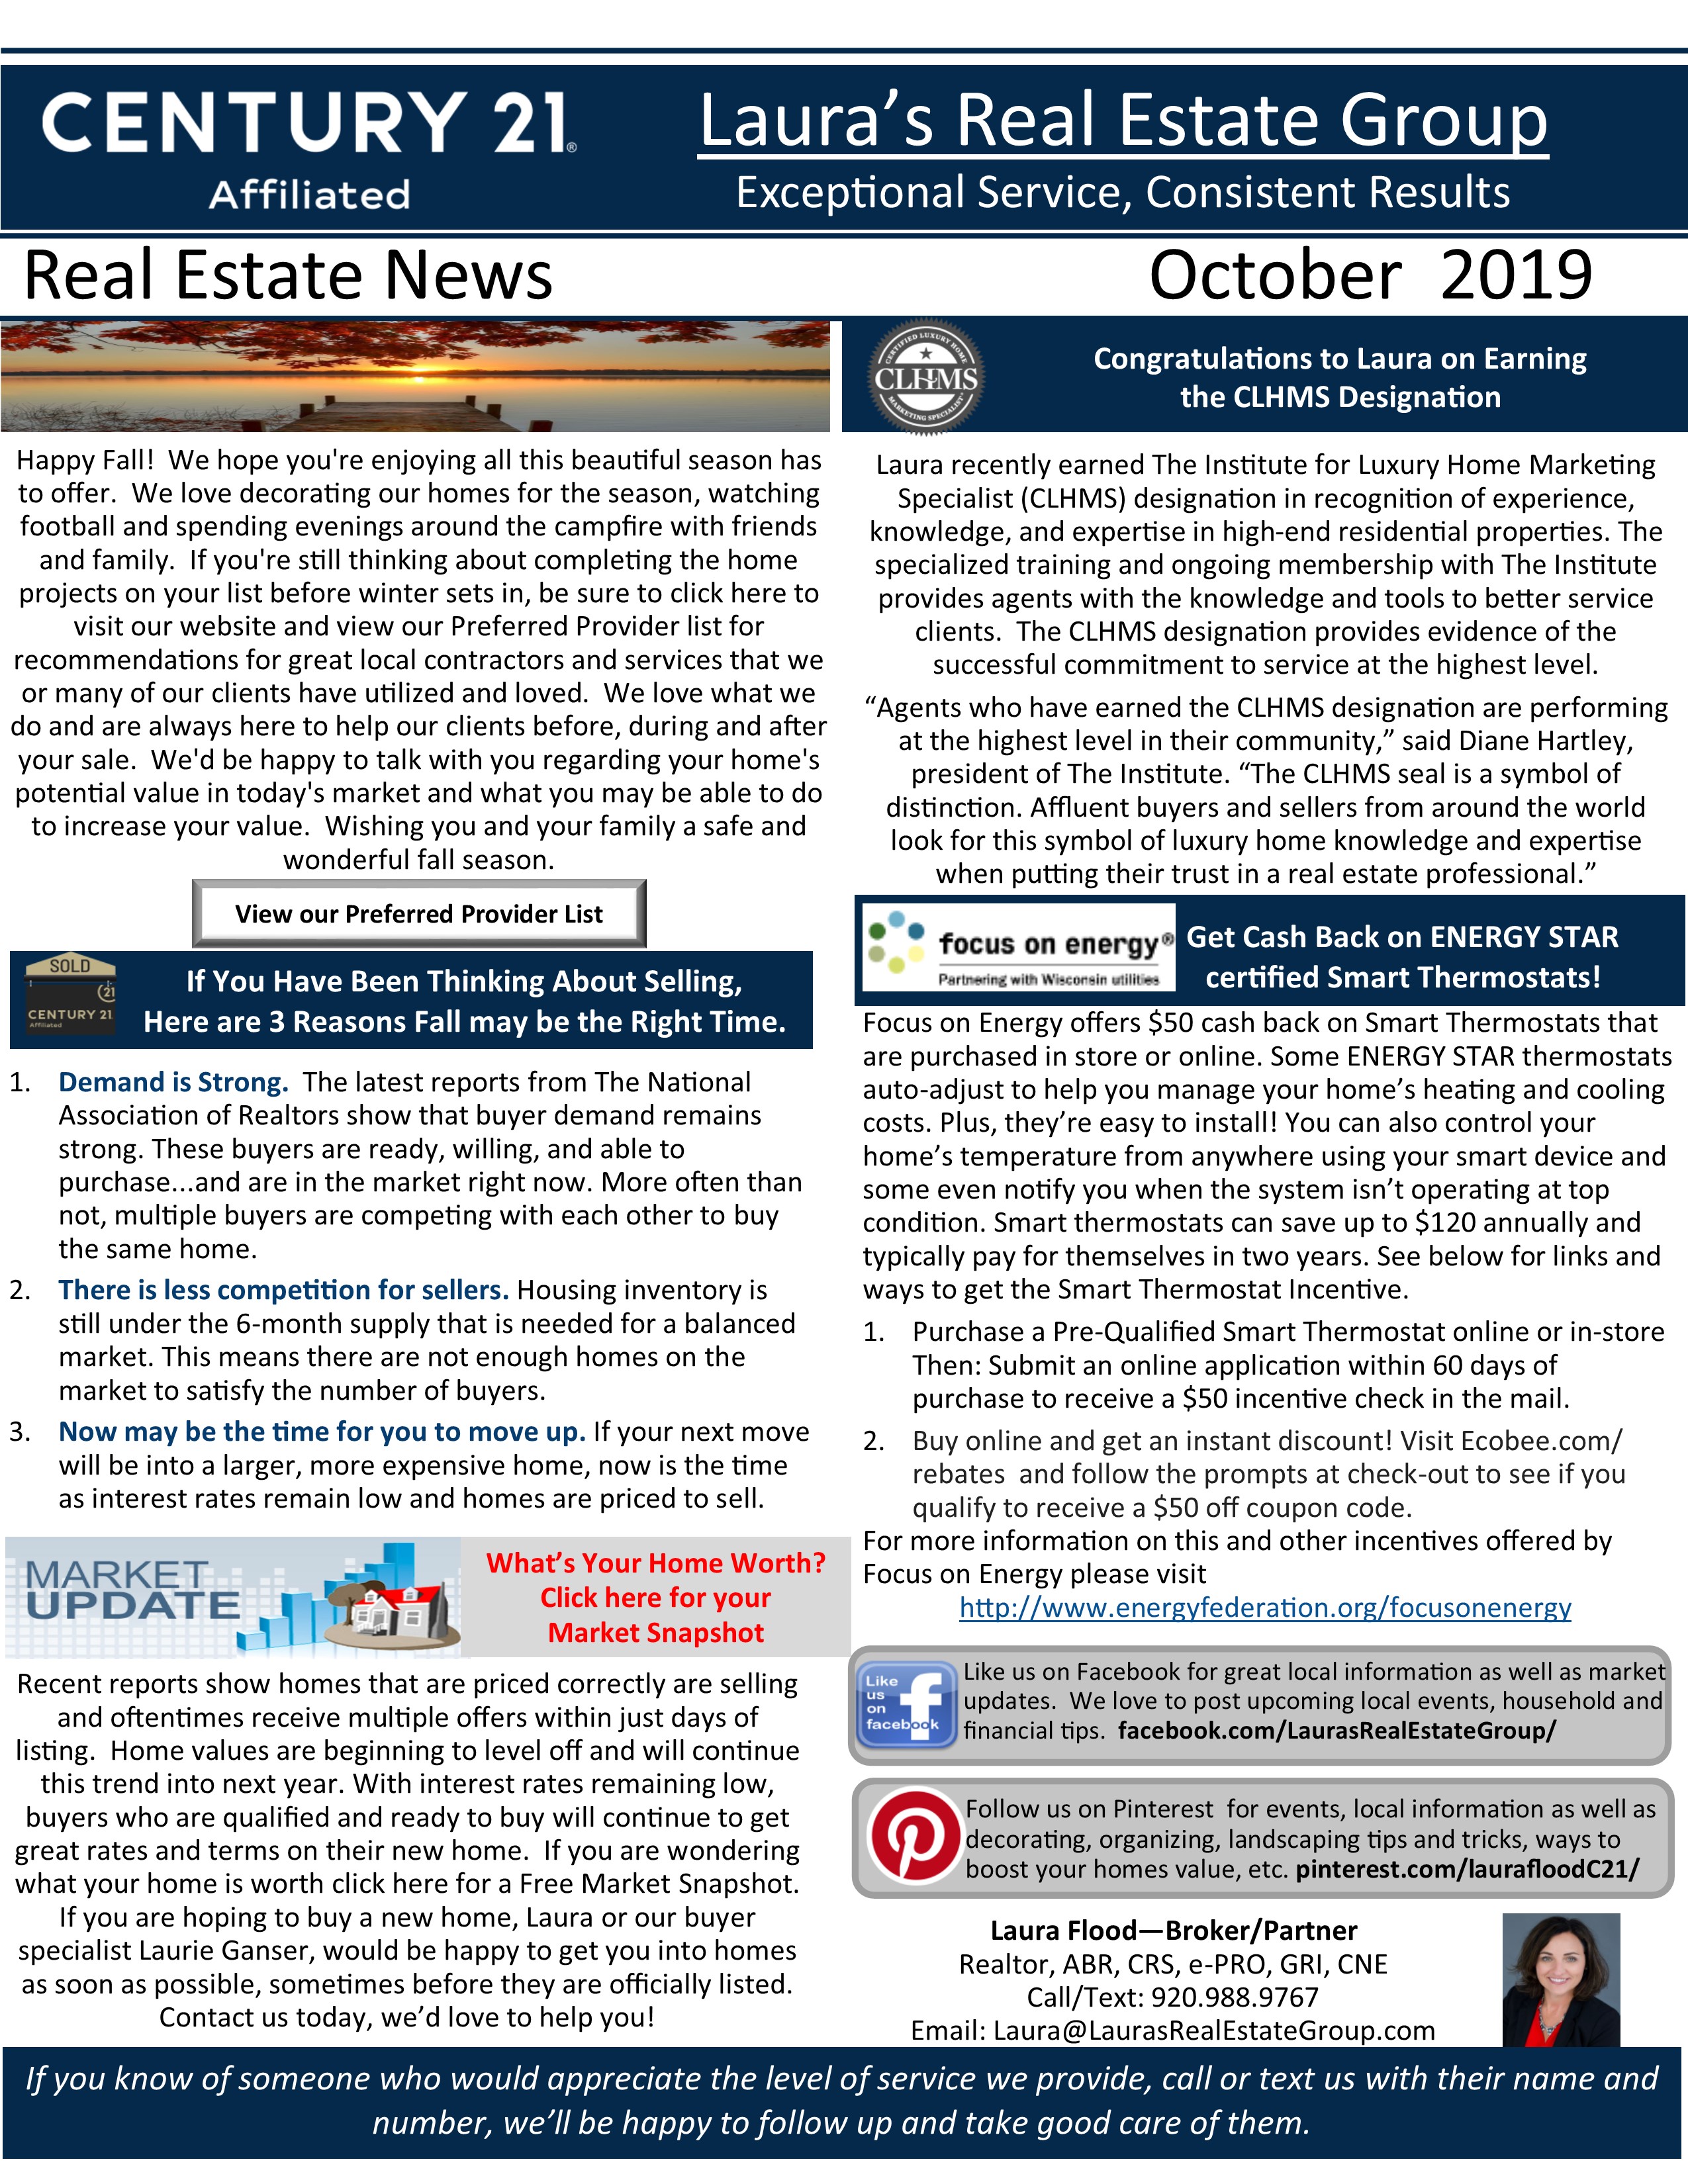 October Real Estate News